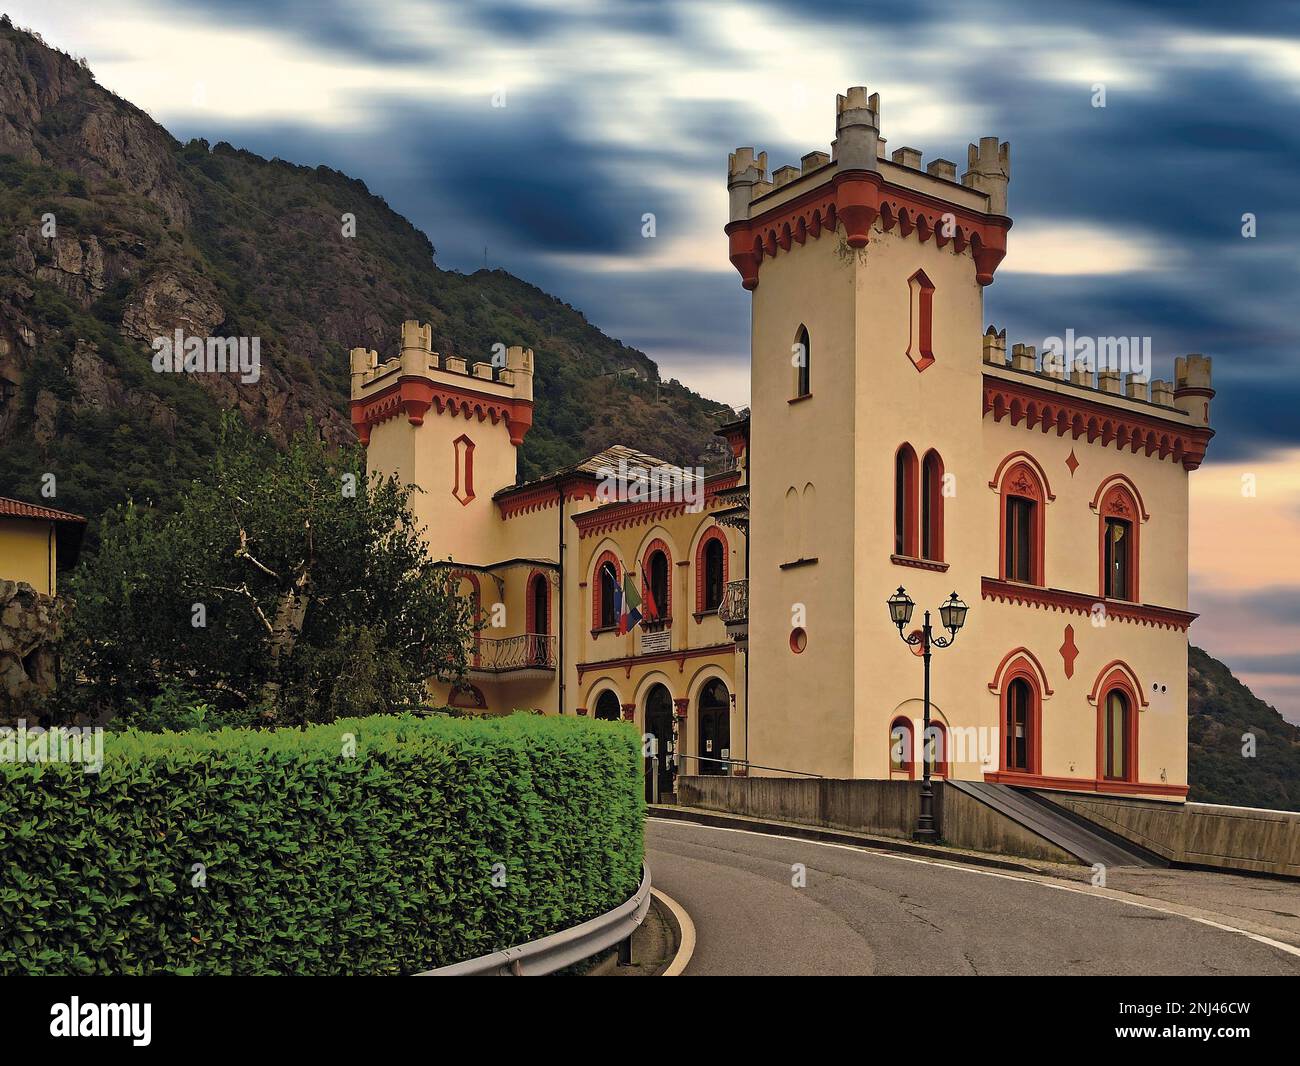 Italy Valle D'Aosta Pont Saint Martin Beraing castle Stock Photo